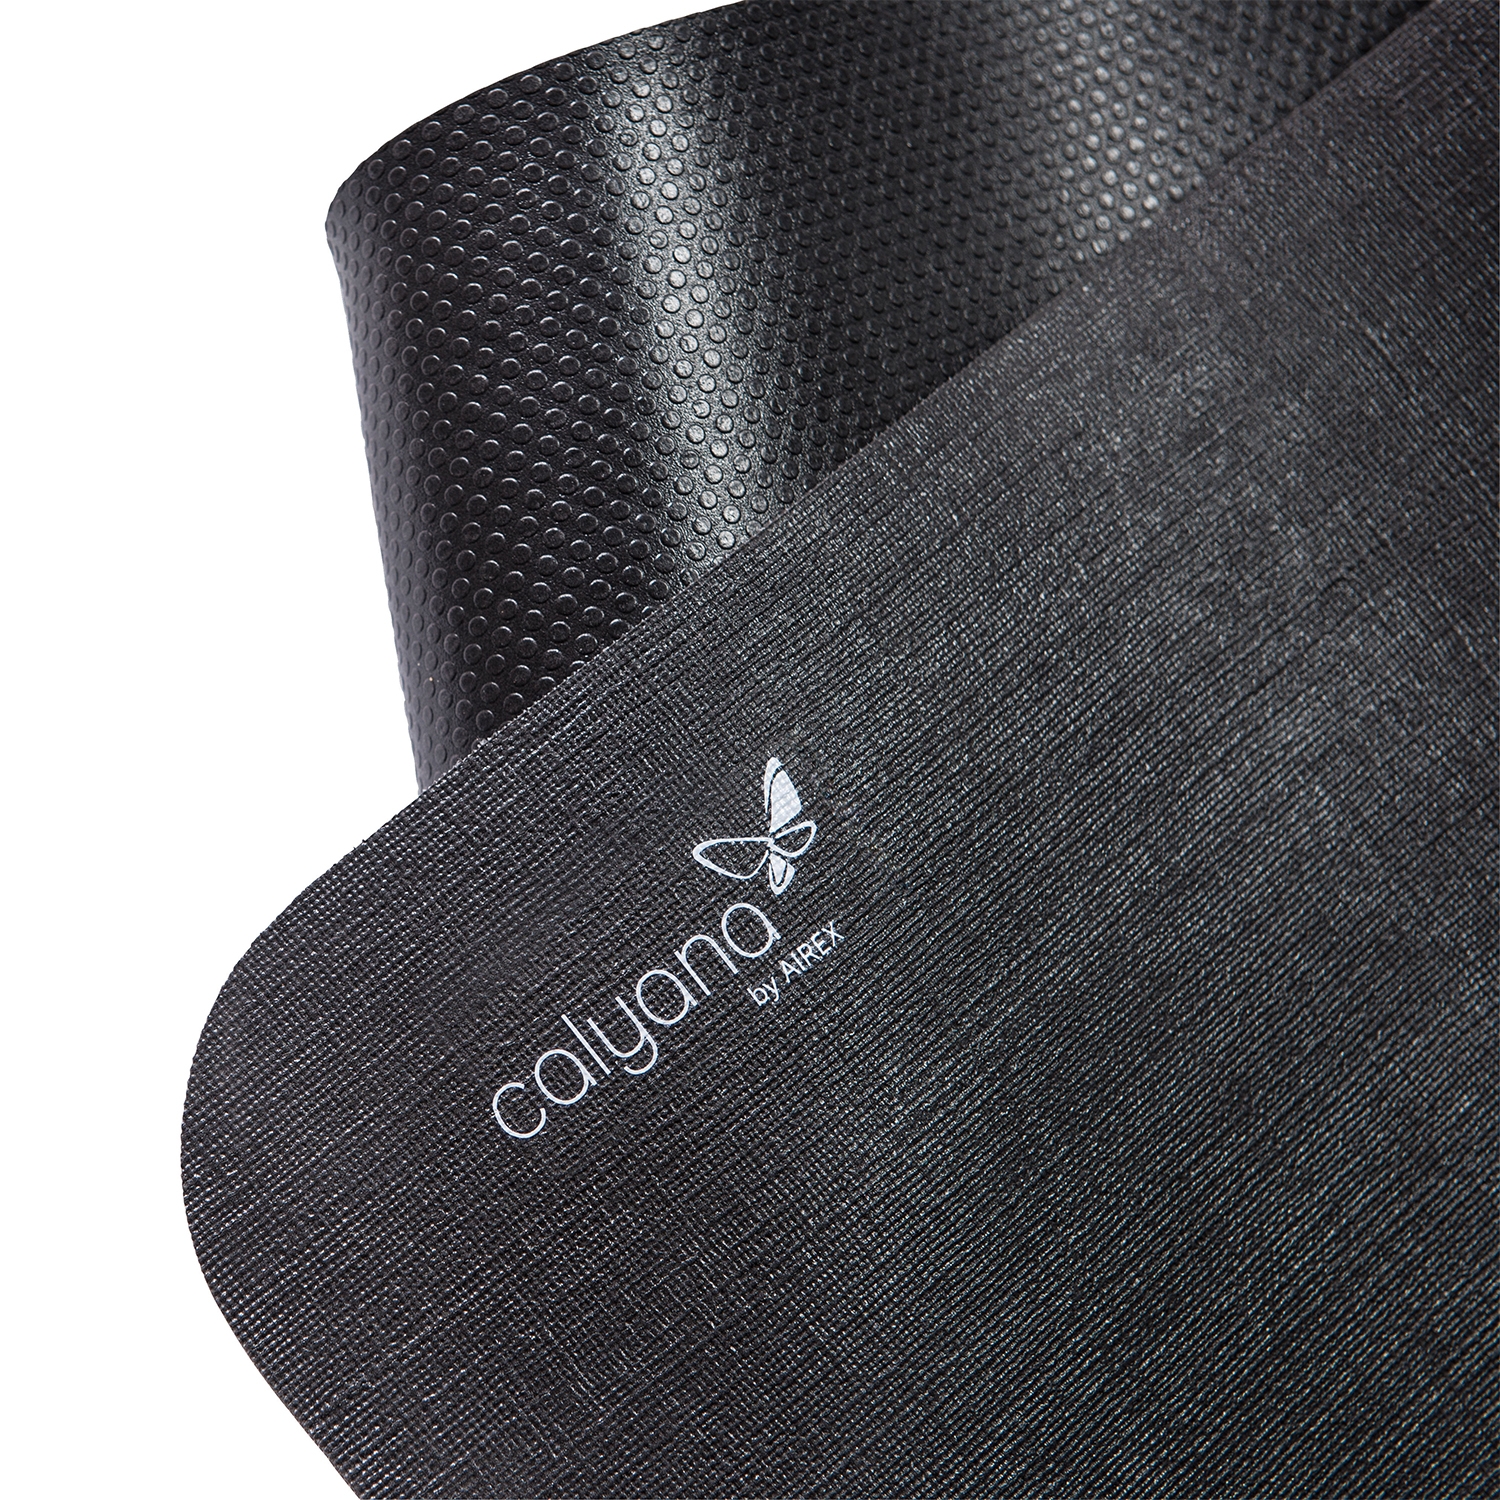 Airex mat Calyana Professional Yoga - 185 x 66 x 0,68 cm - stone grey